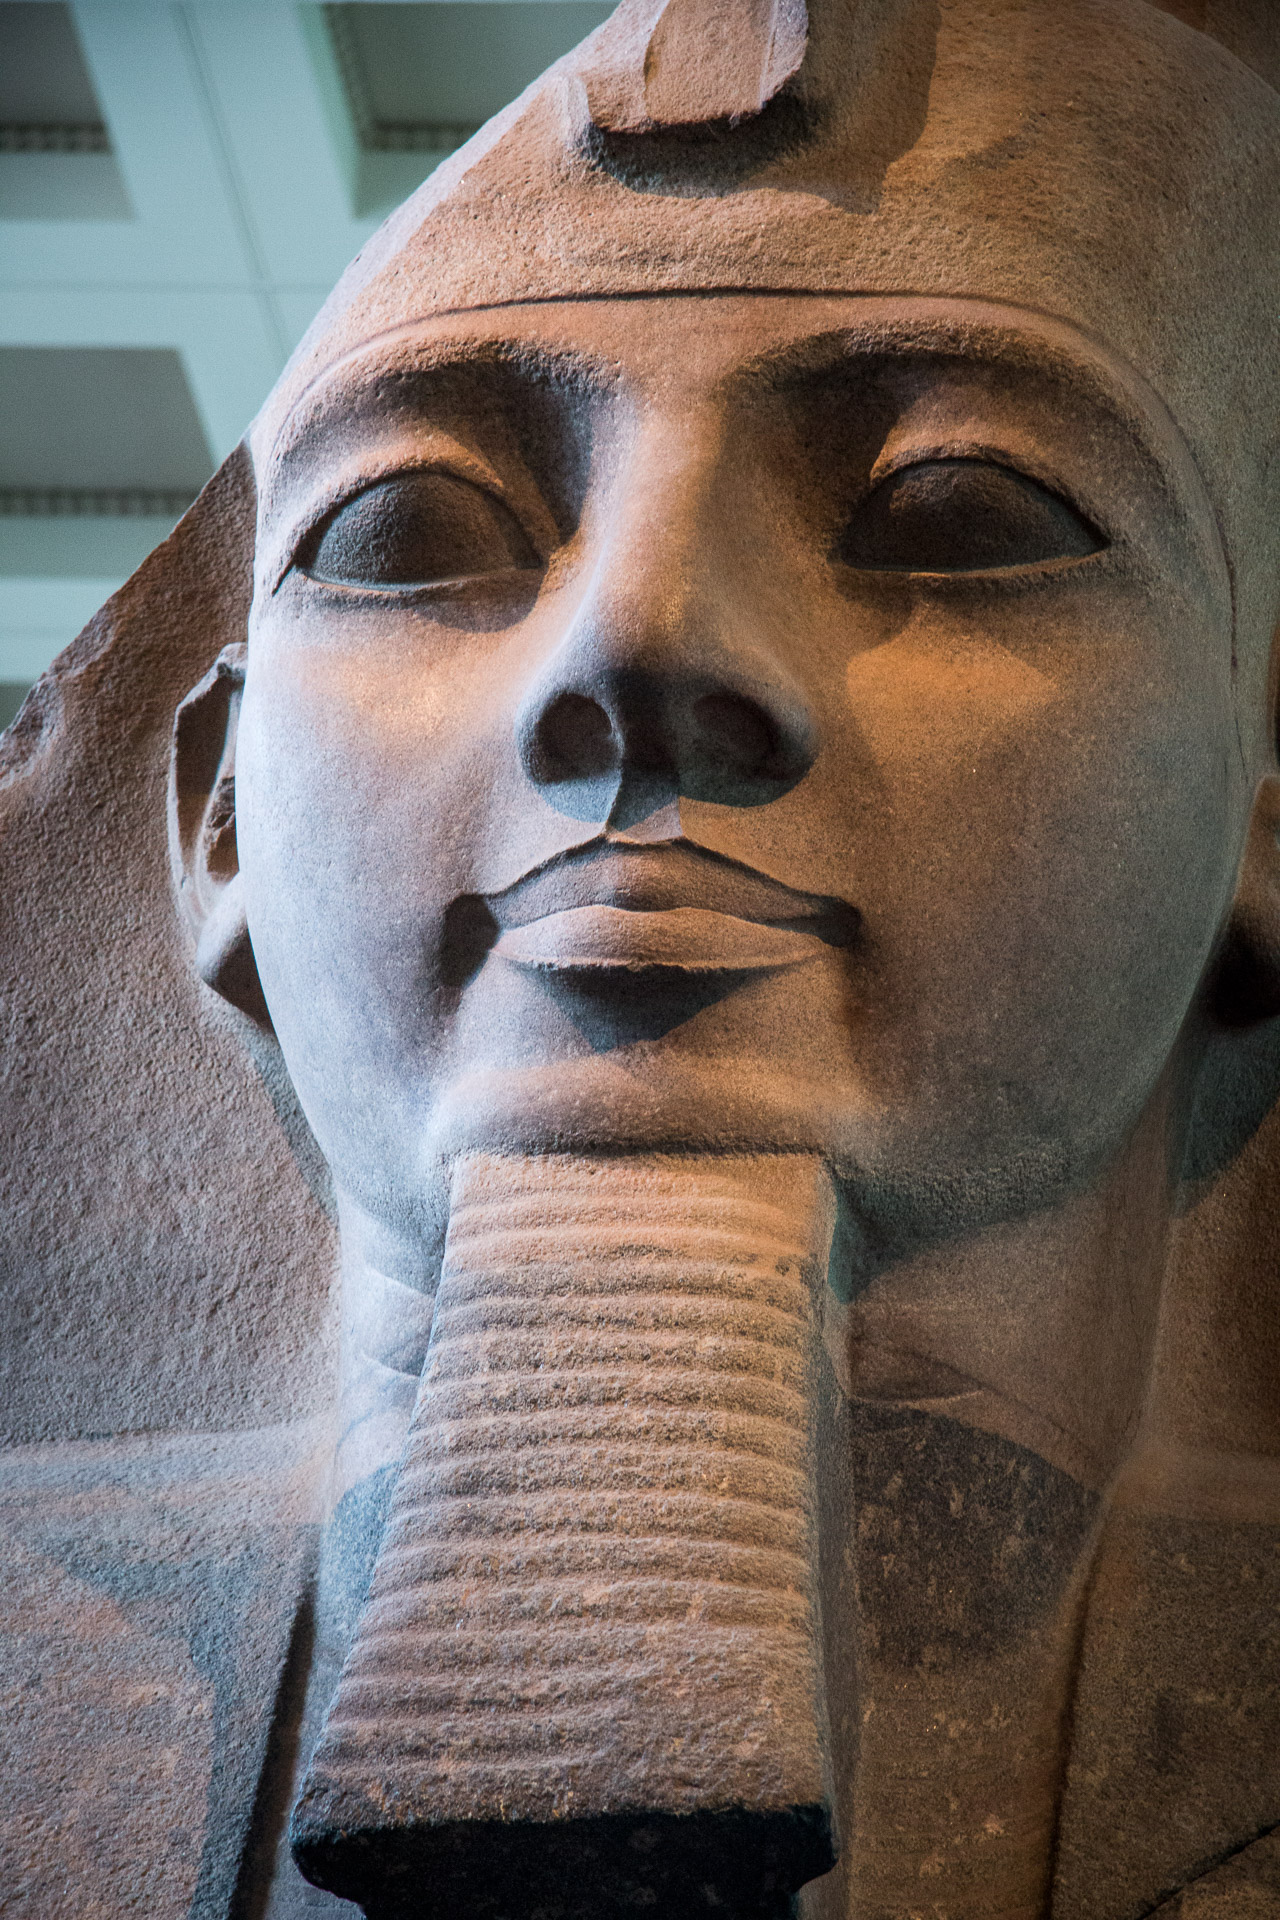 Ramses II statue at the British Museum in London